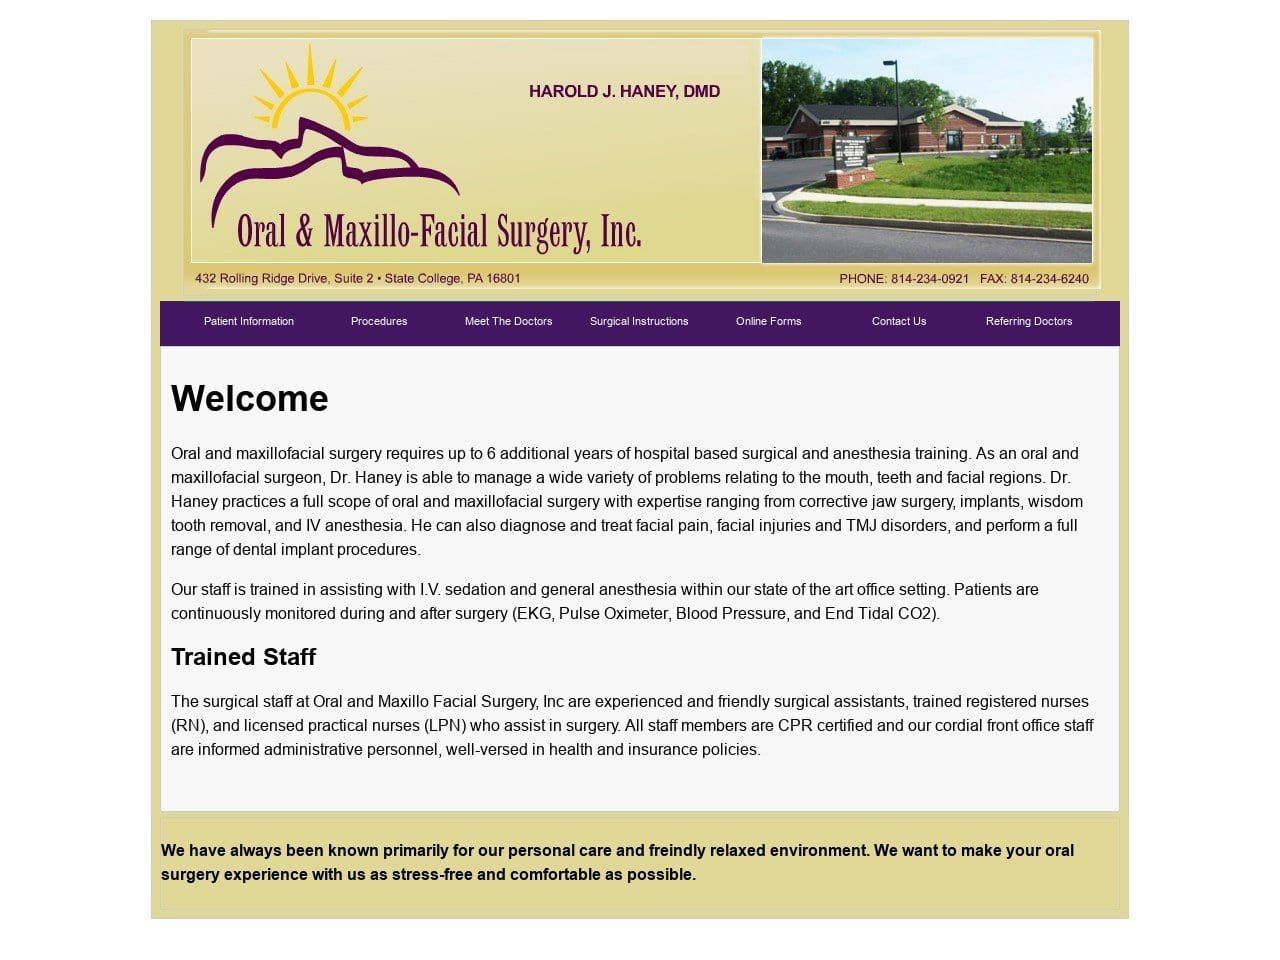 Oral & Maxillofacial Inc Website Screenshot from omfsi.com